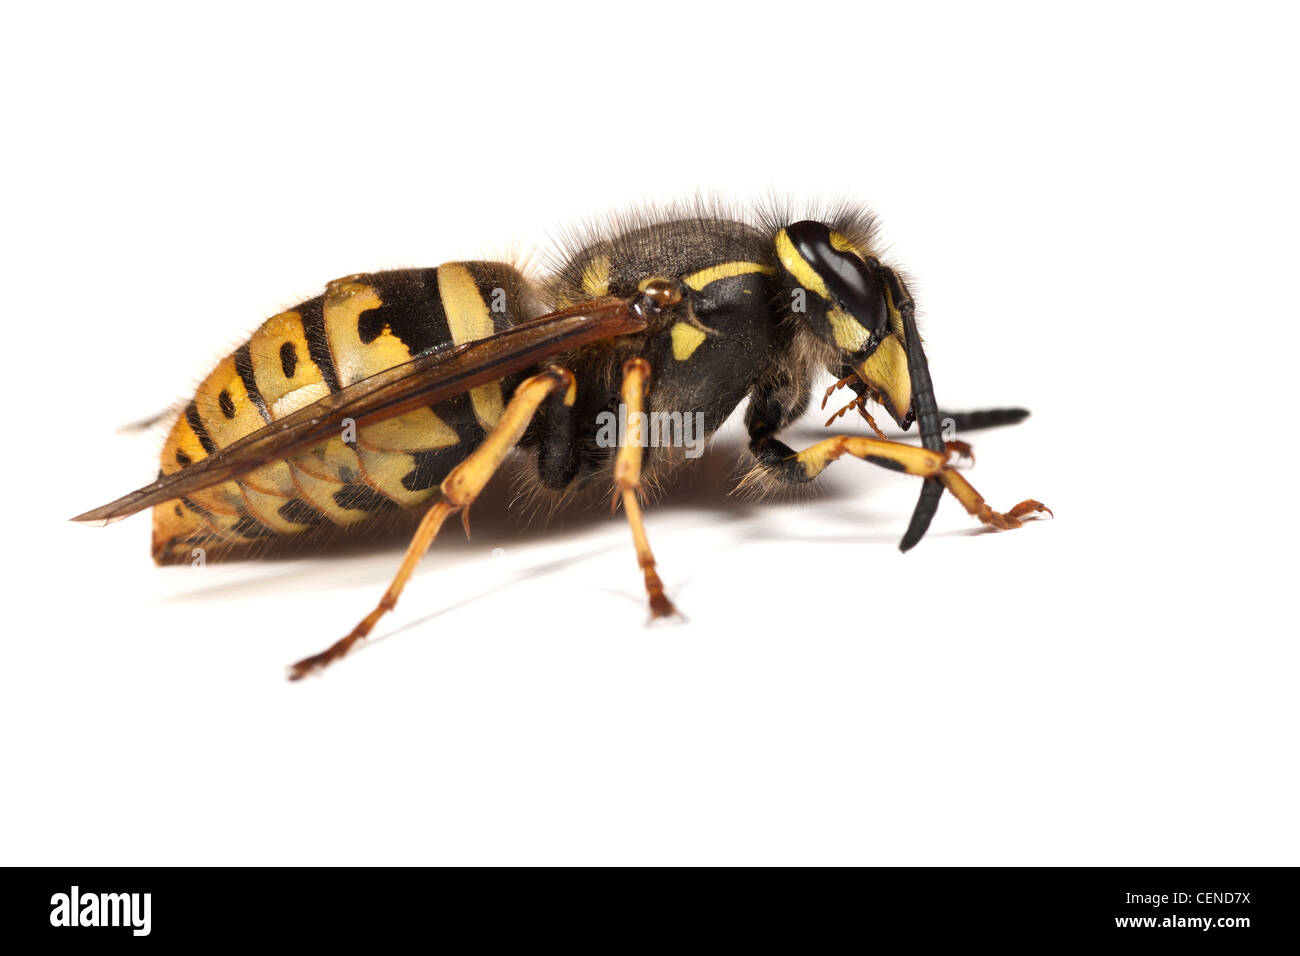 Queen wasp - Vespula vulgaris - grooming its antenna Stock Photo